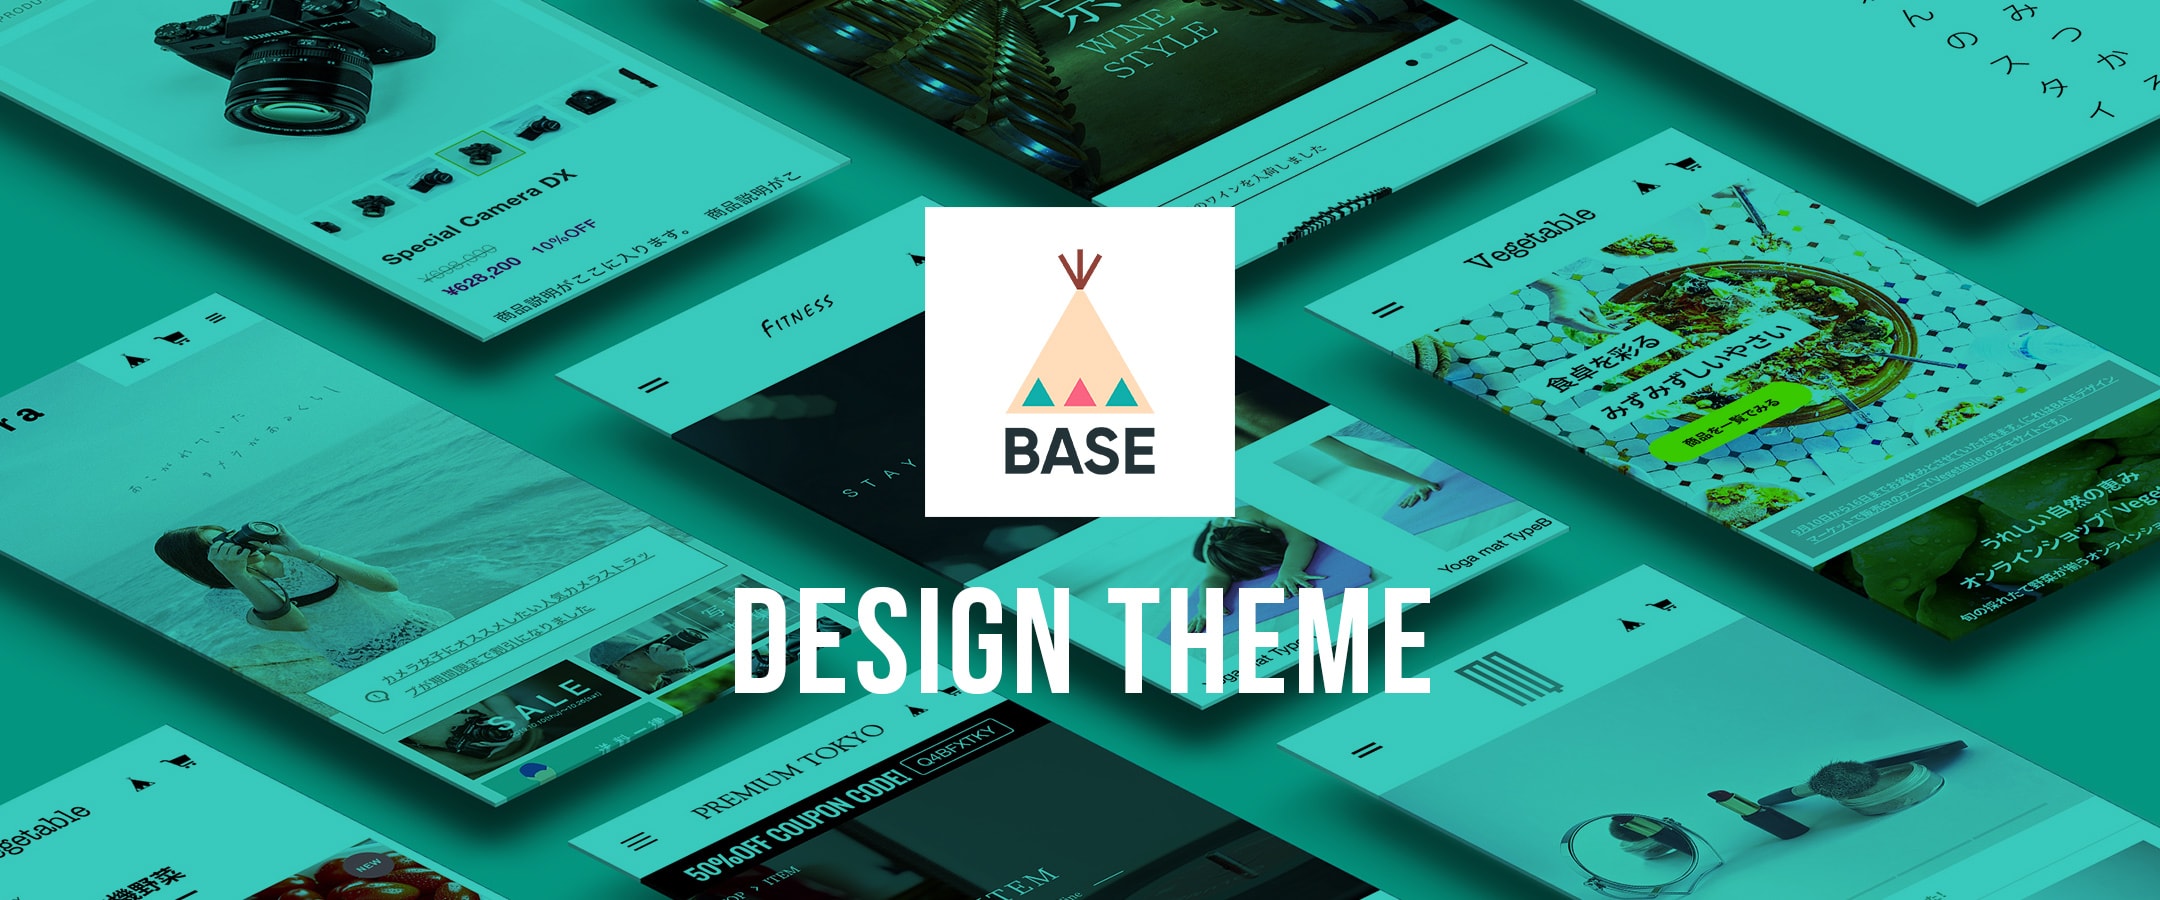 BASEテーマカスタマイズ【デザインオプション編】テーマに新しい機能を加える方法